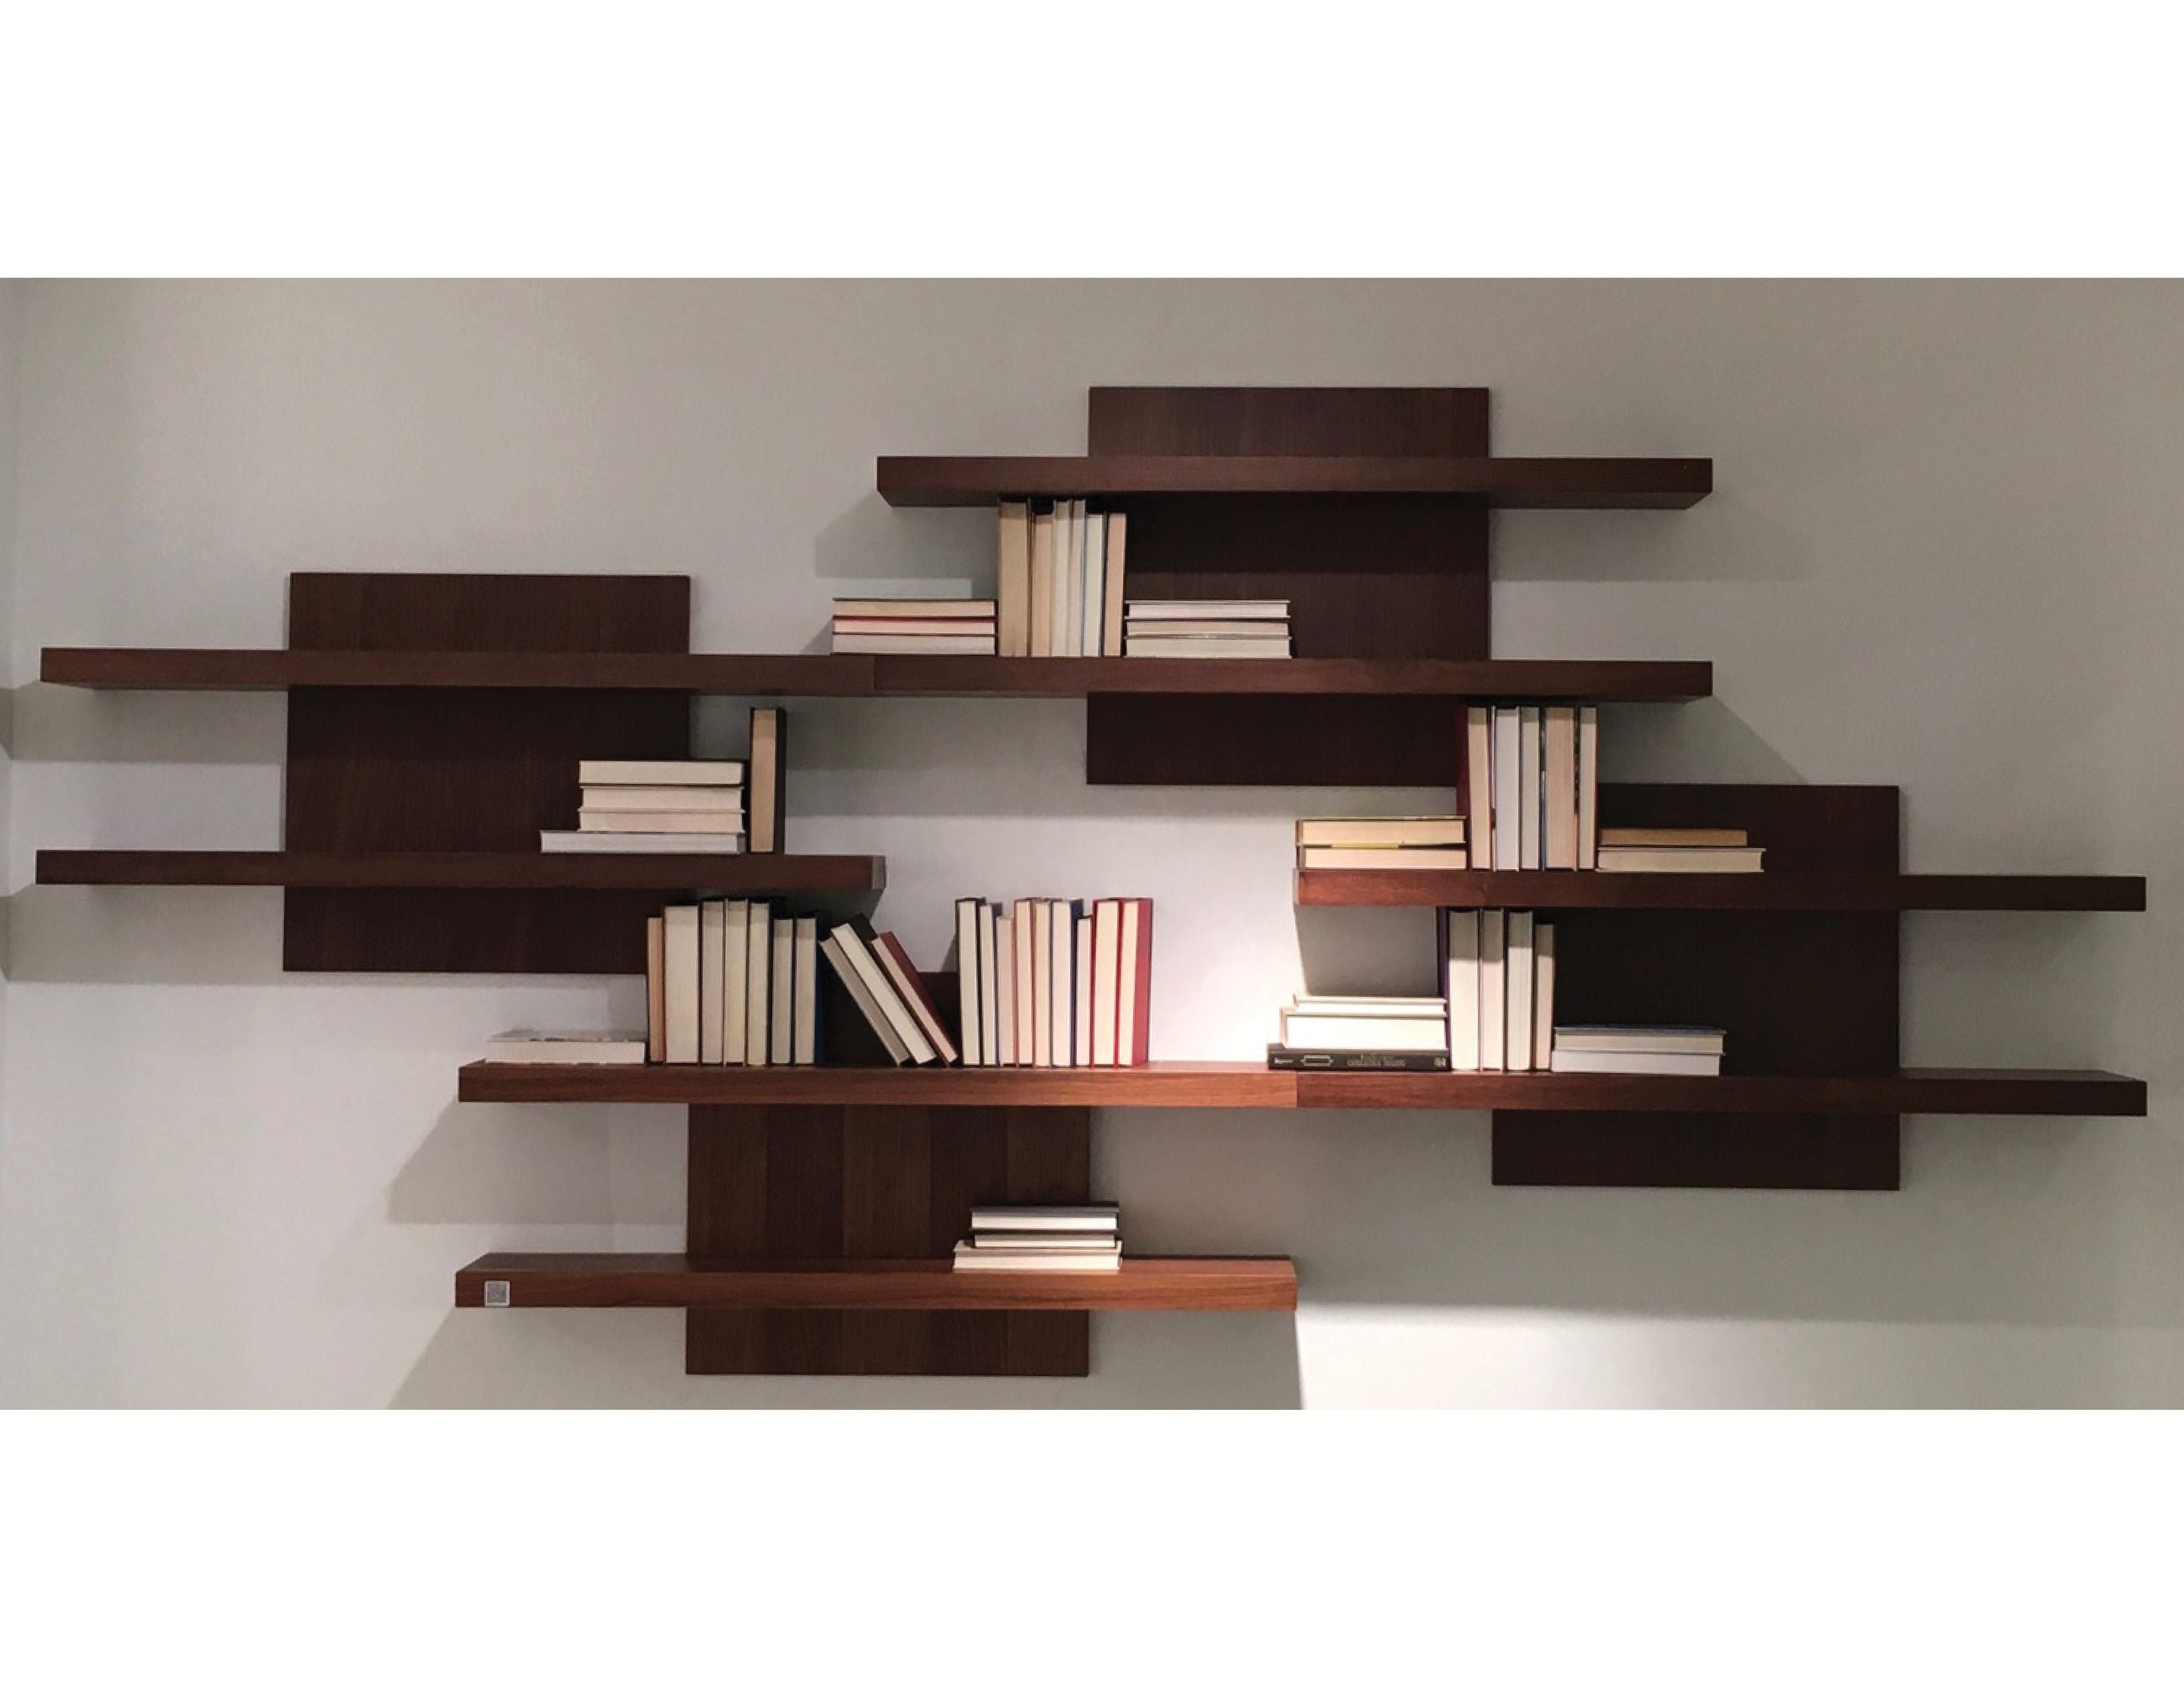 CARGO Shelf Unit Bookshelf in Natural Walnut